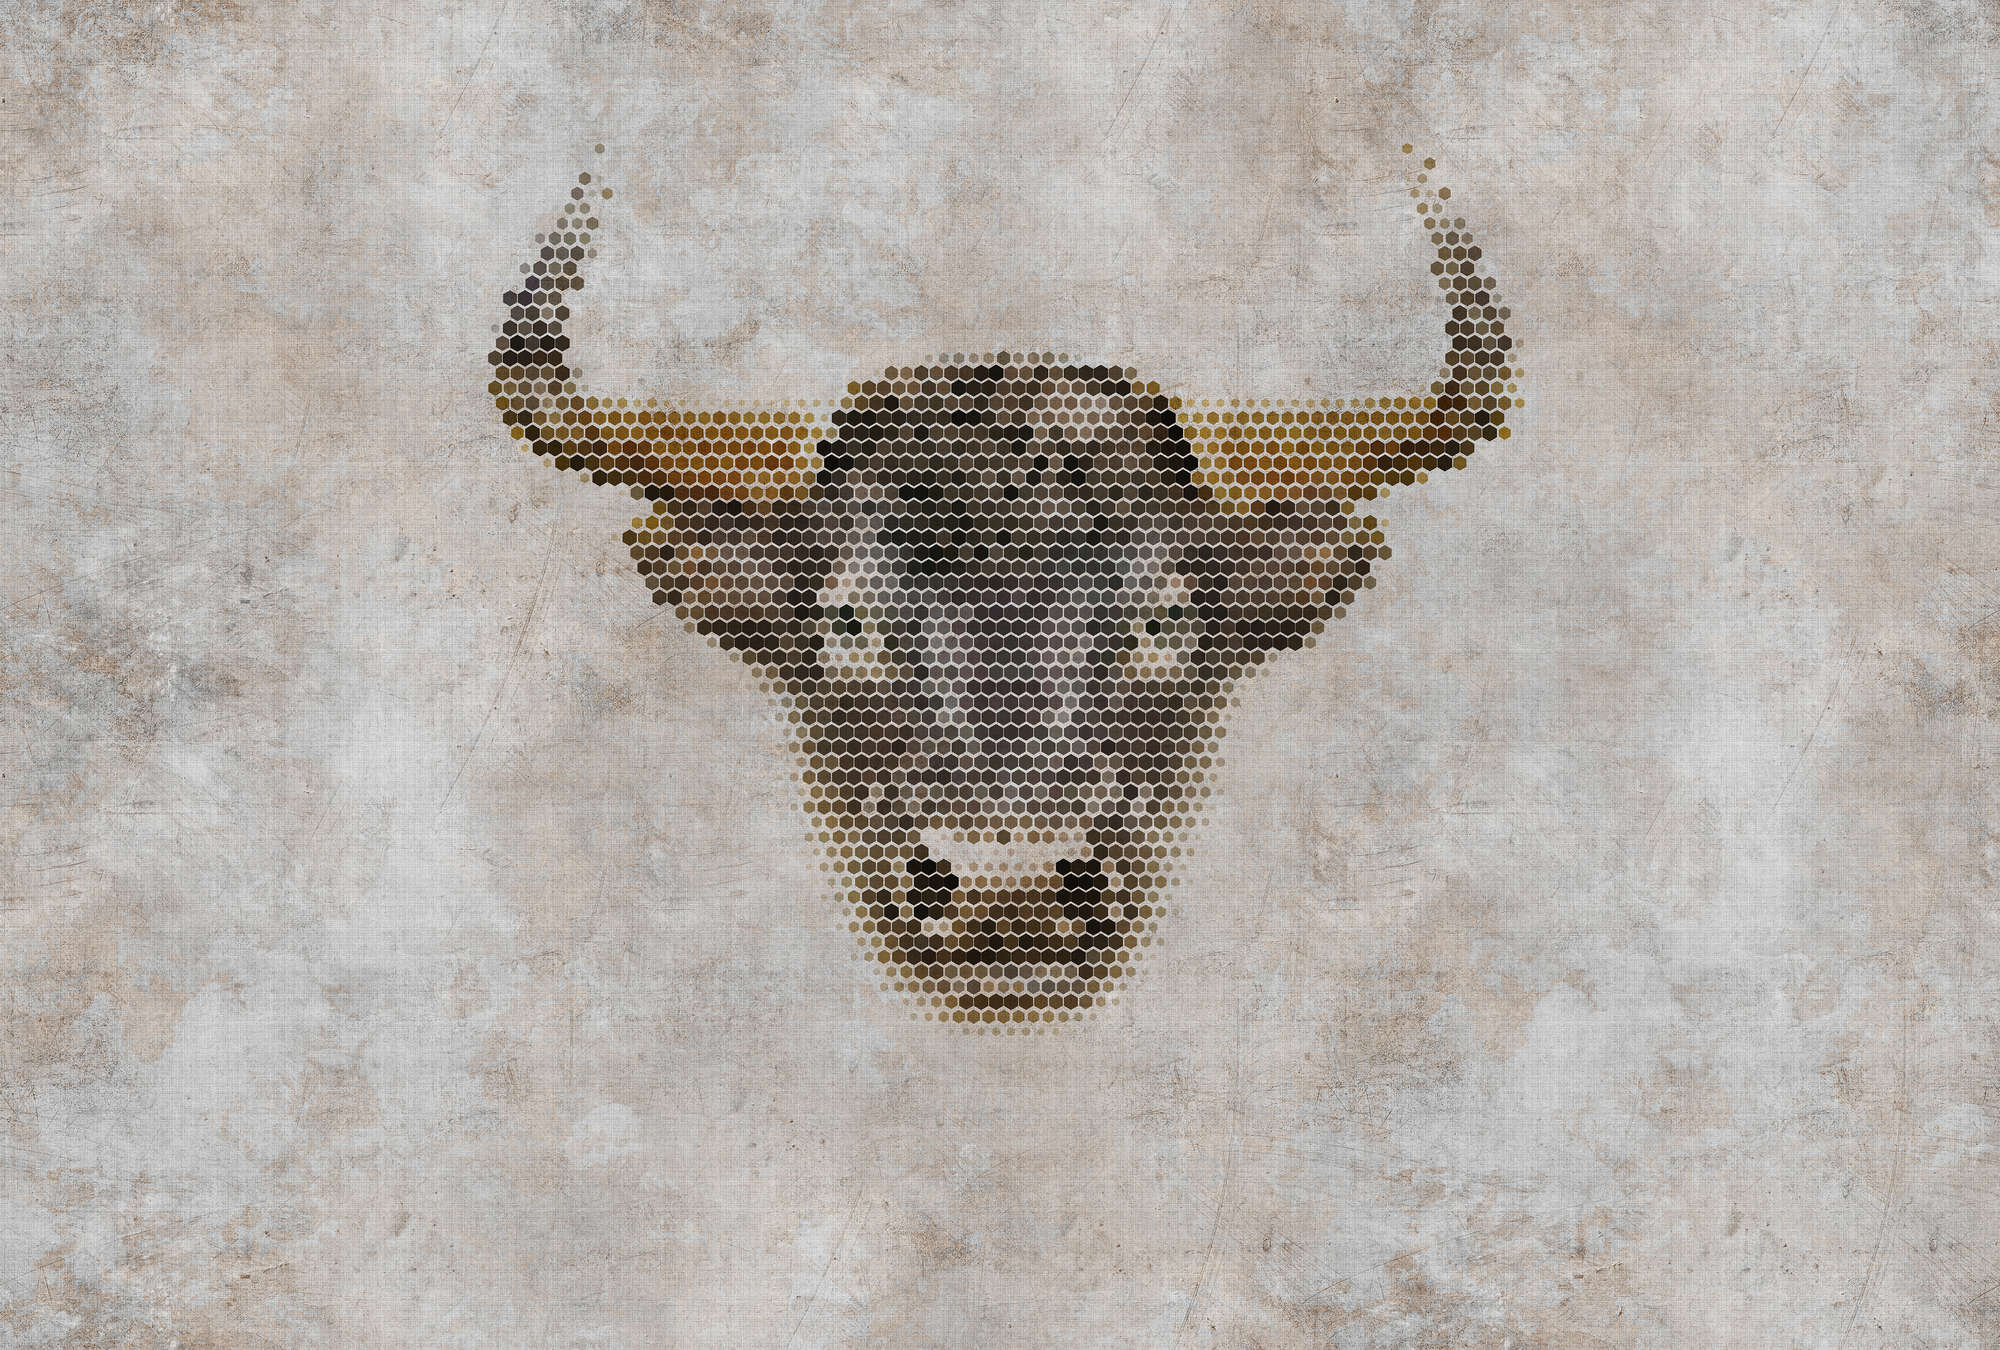             Big three 2 - digital print wallpaper, natural linen structure in concrete look with buffalo - beige, brown | matt smooth fleece
        